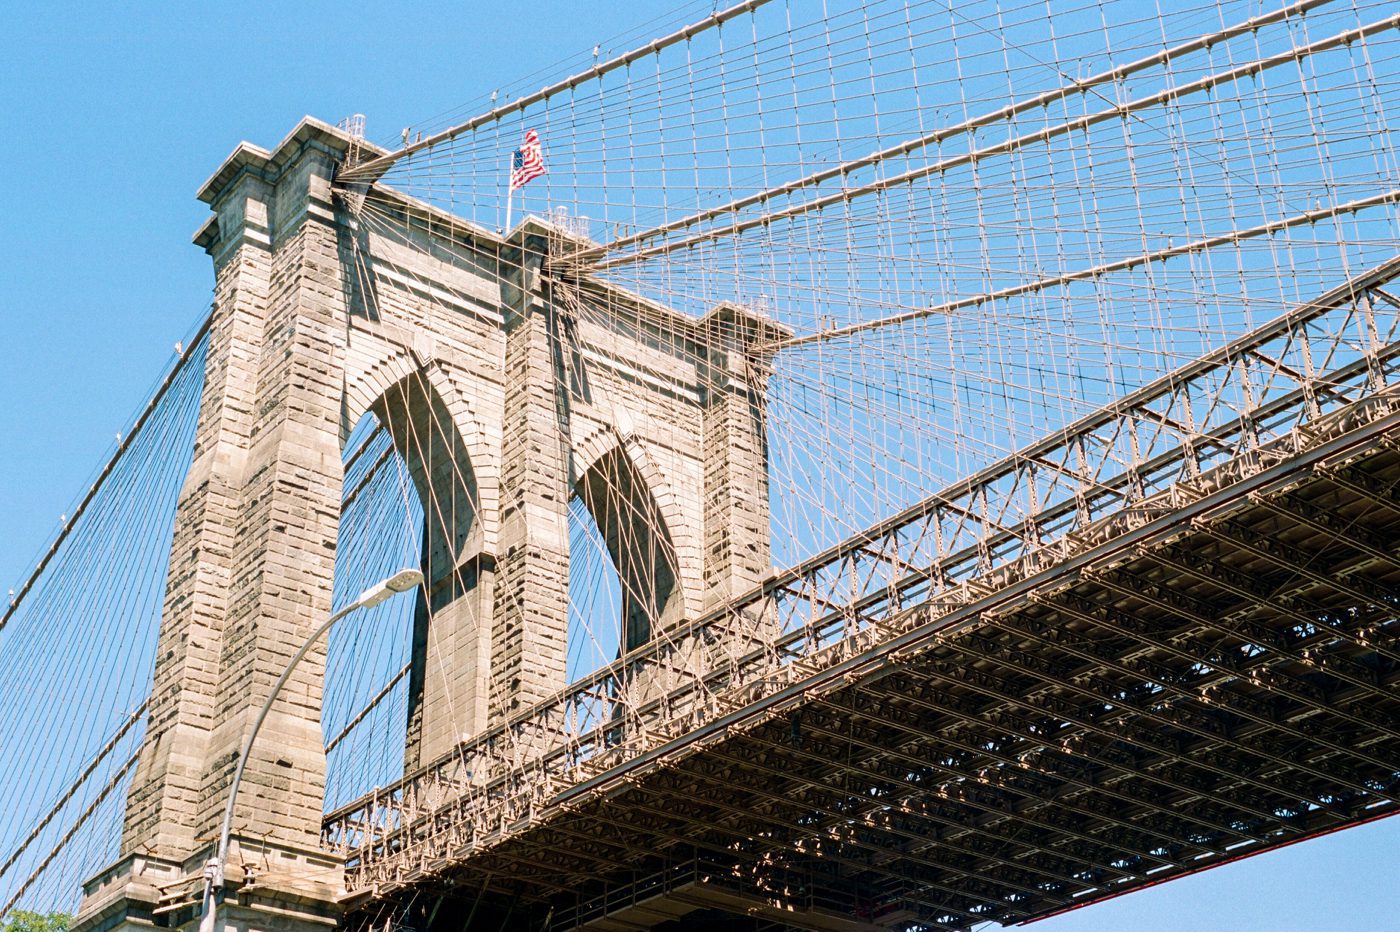 Brooklyn Bridge photo. Kodak Portra 400 film. Catherine Ann Photography